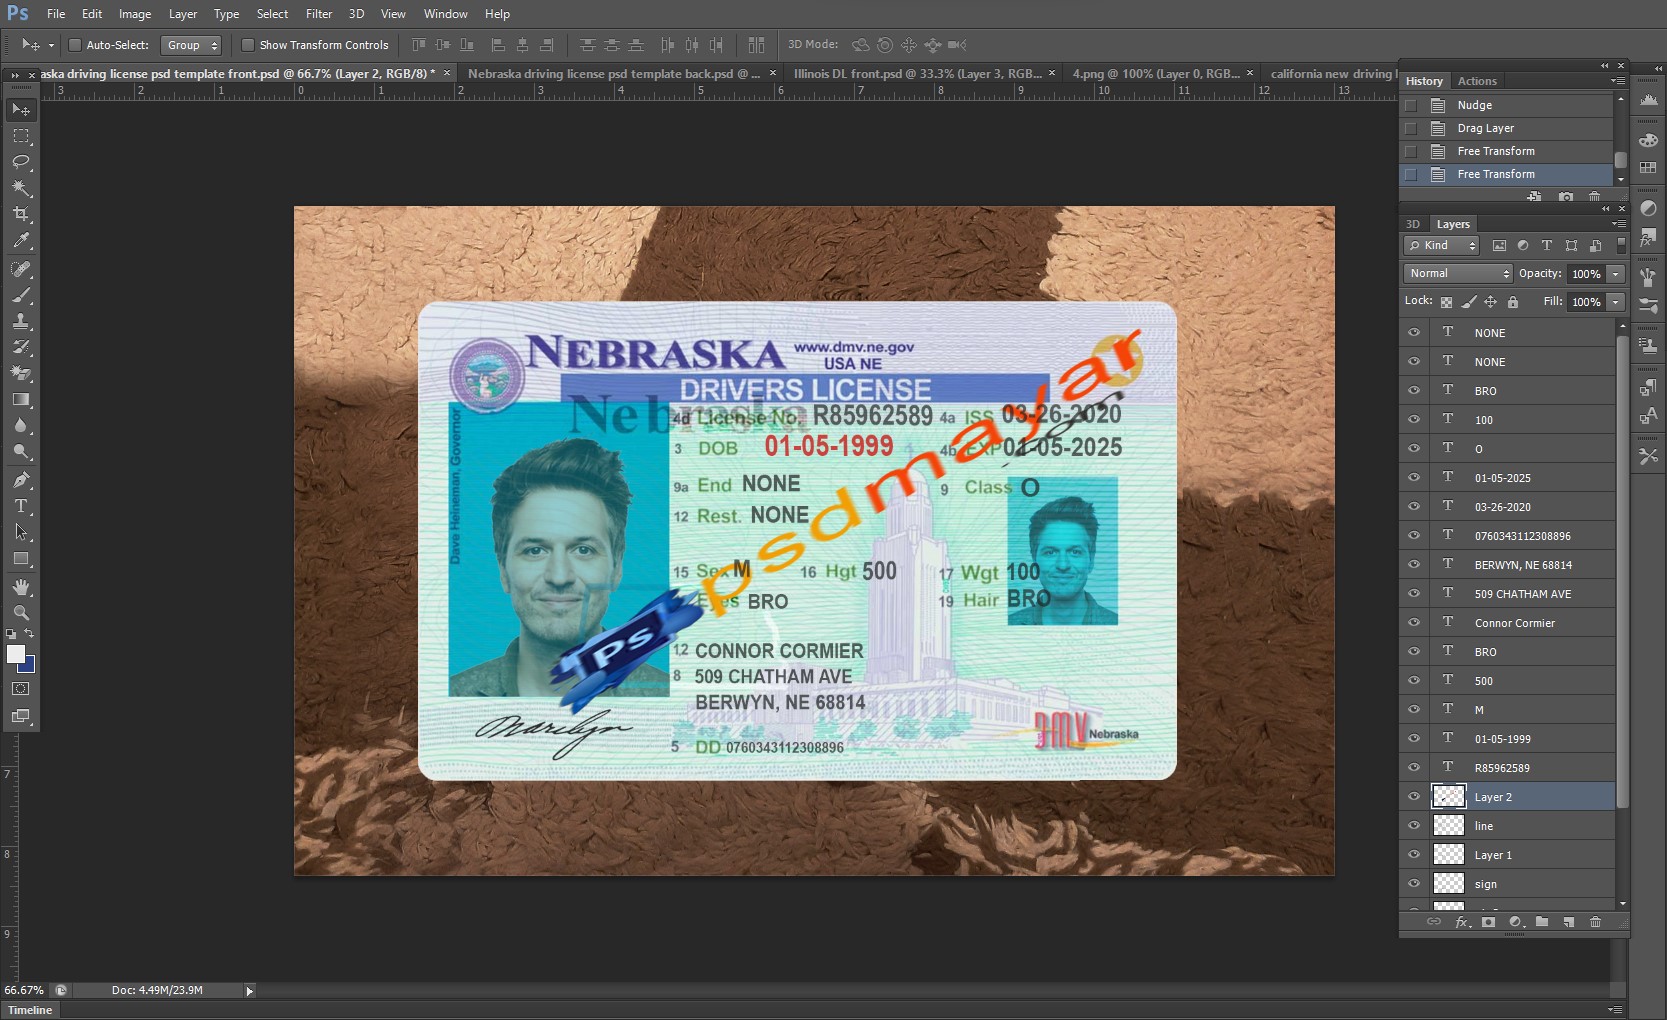 Nebraska driving license psd template